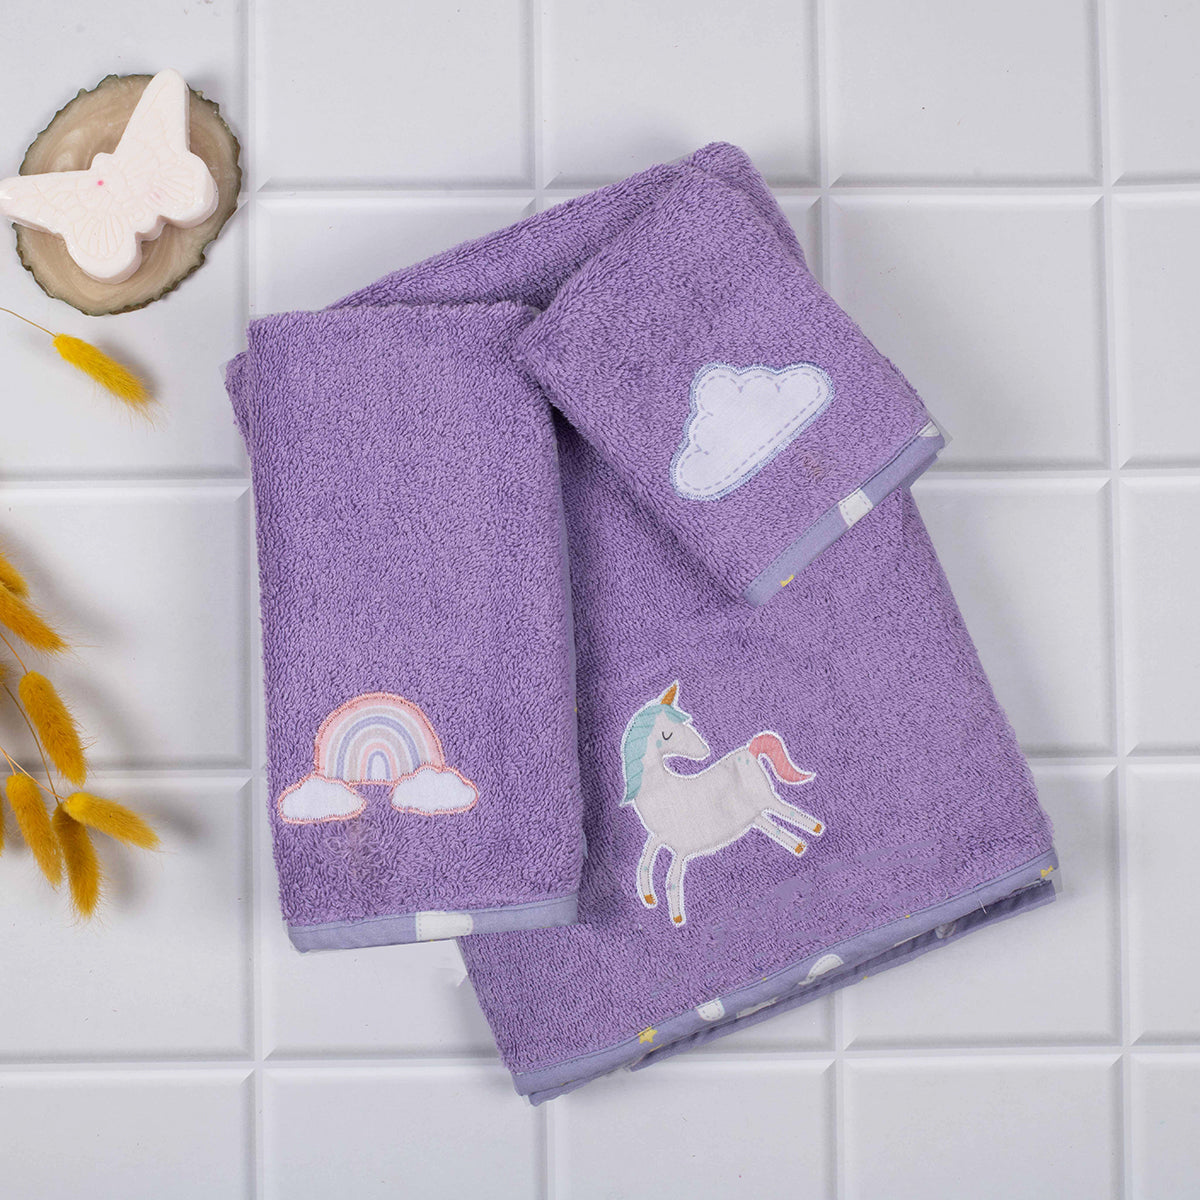 Tiny snooze kids towels (set of 3)- purple